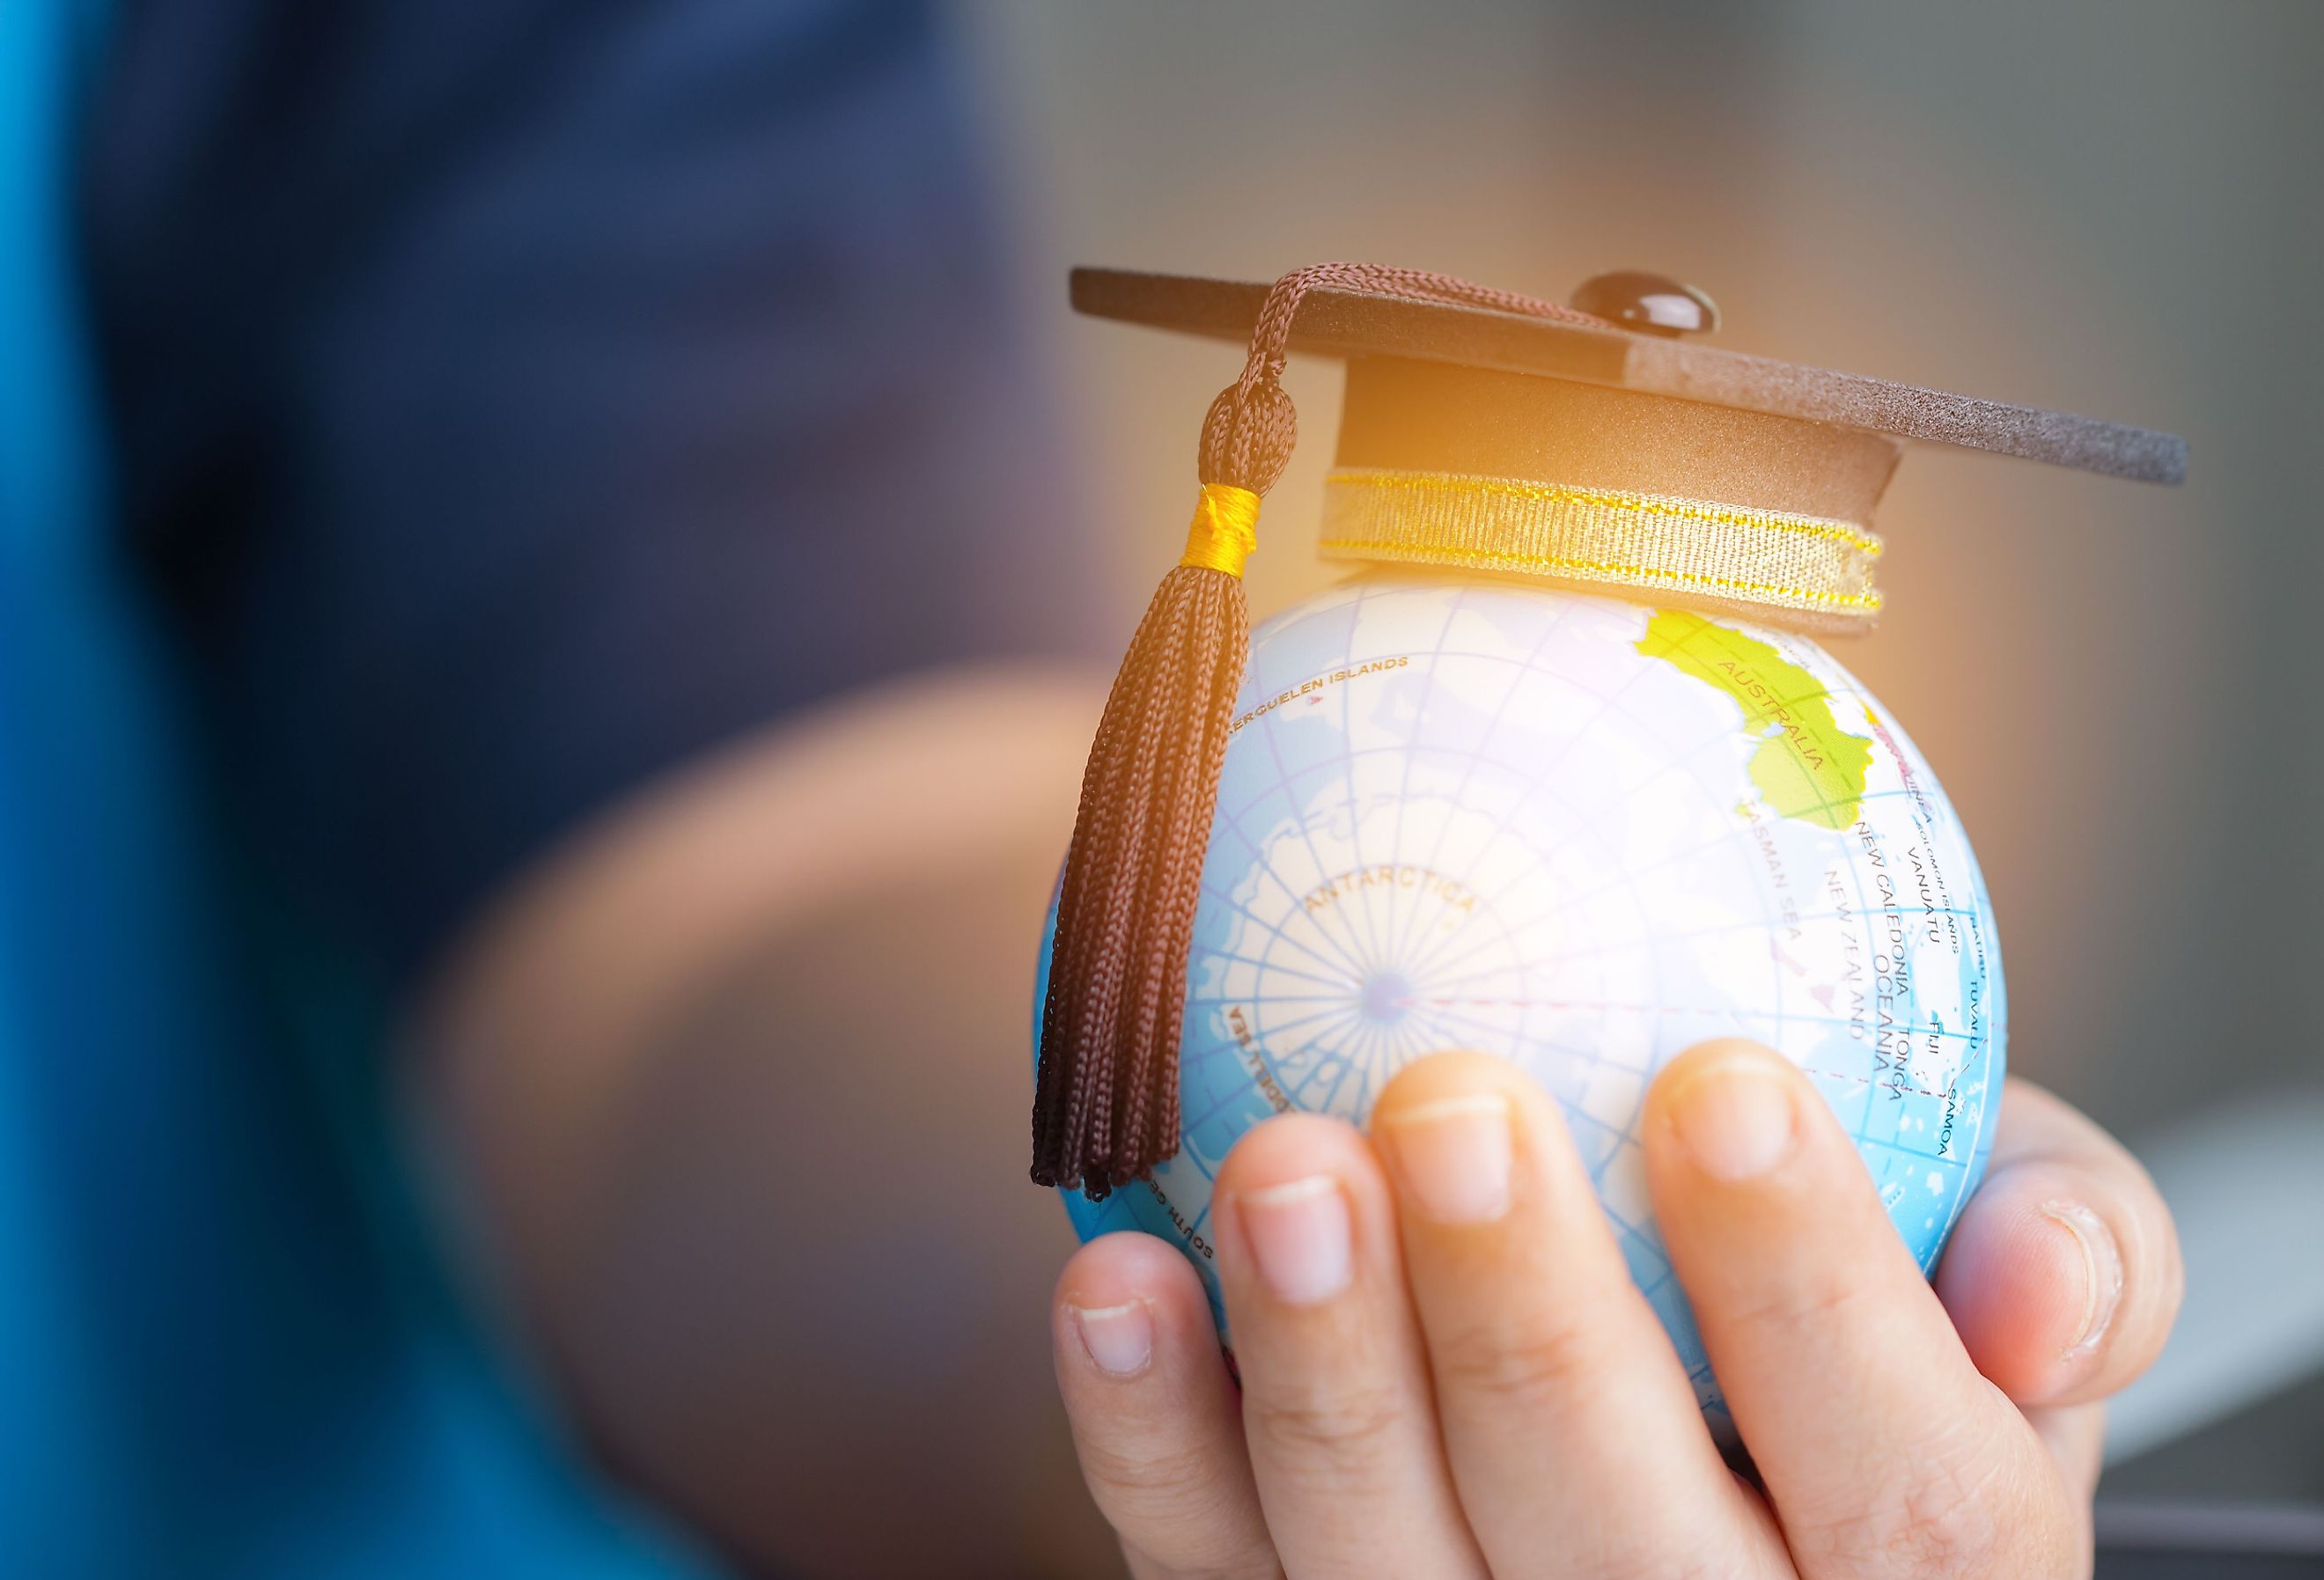 Education around the globe. Image credit: smolaw via Shutterstock